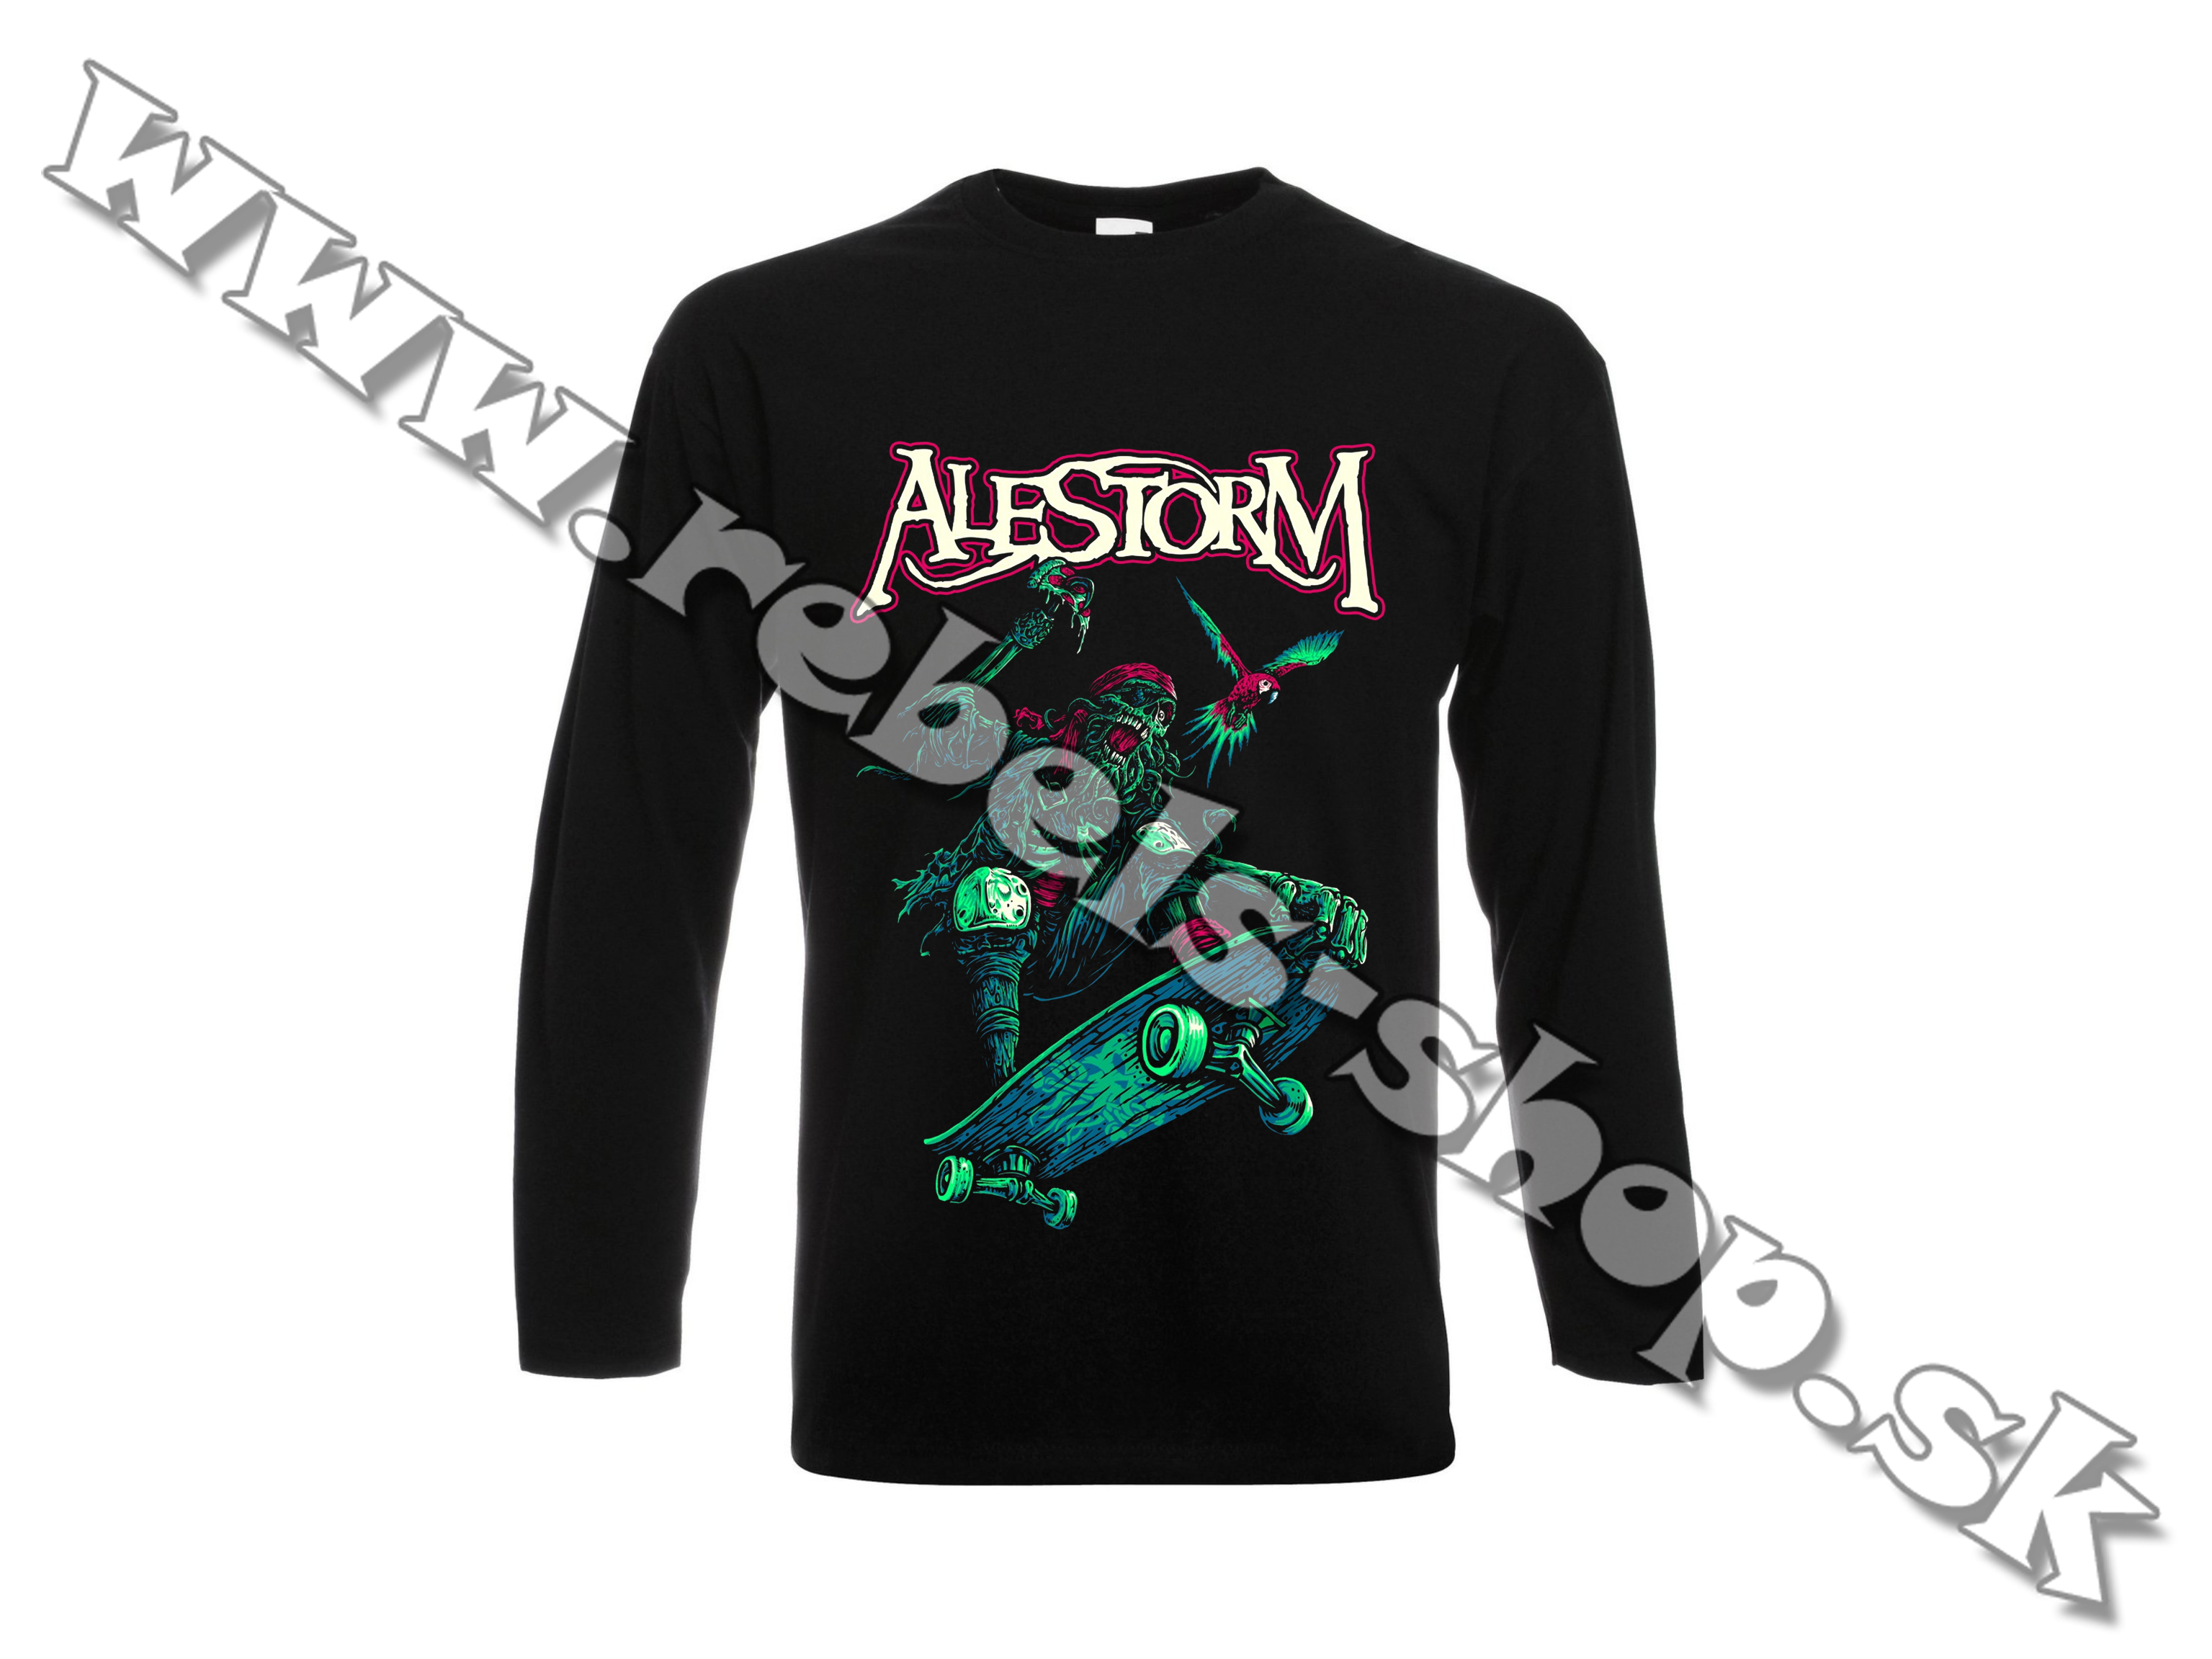 Tričko "Alestorm"